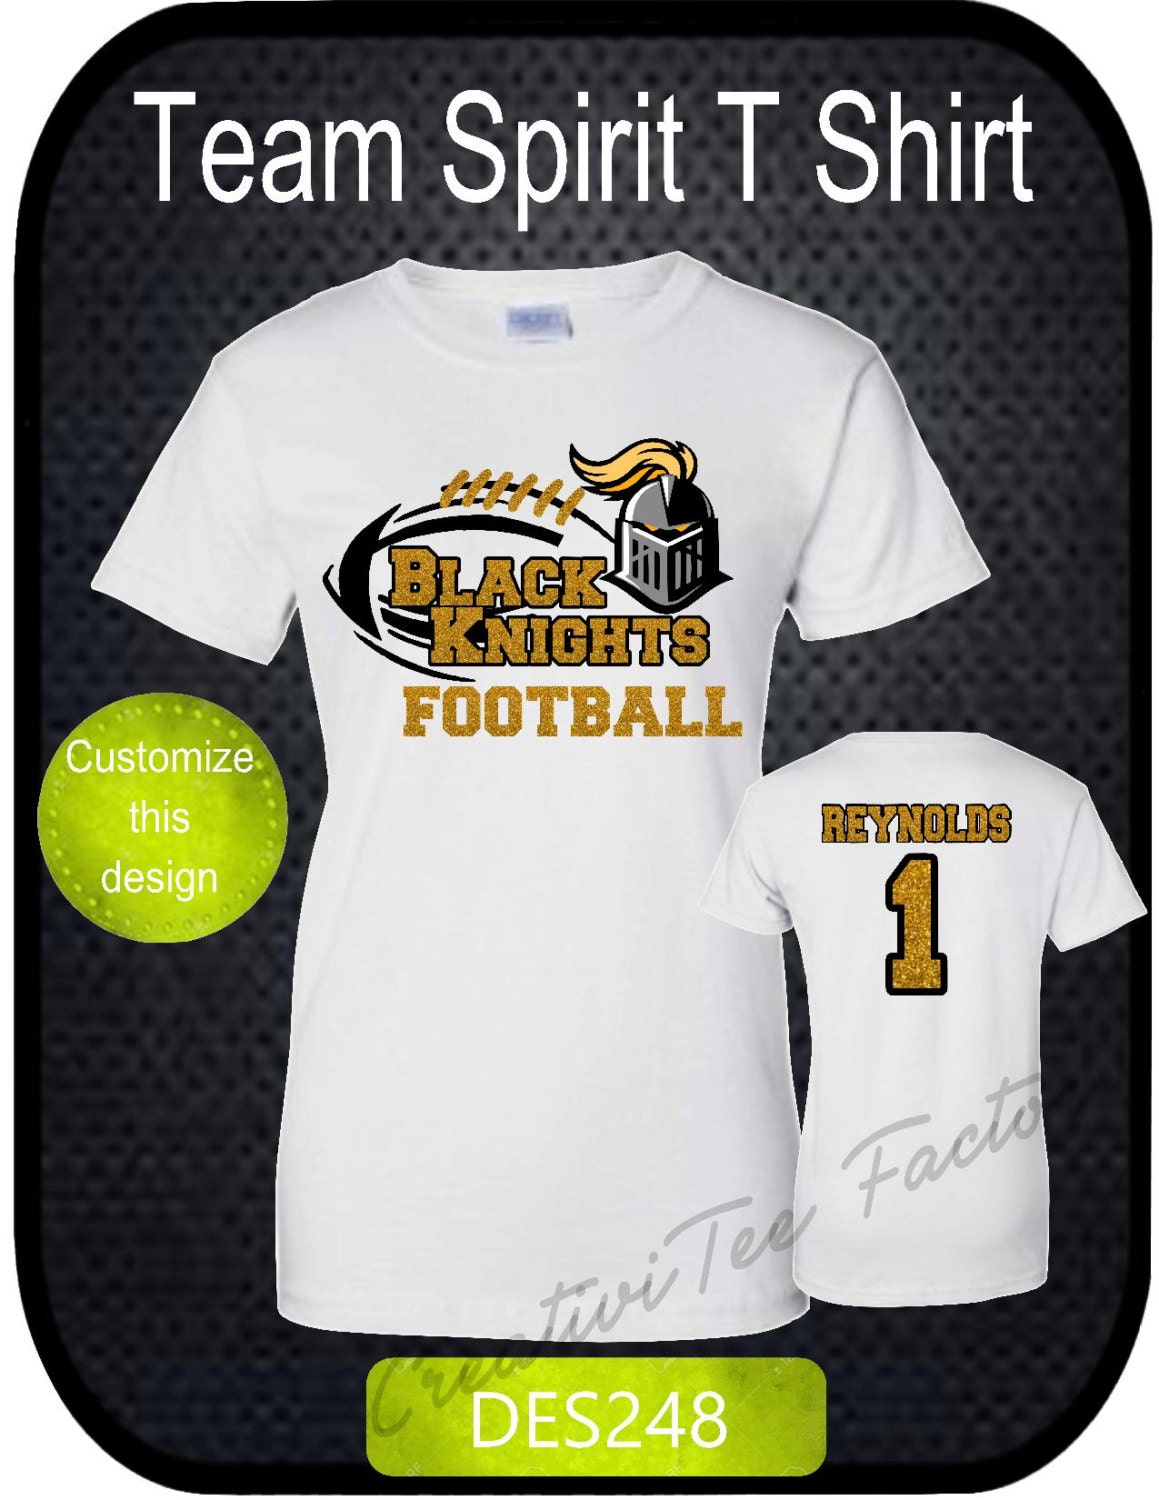 teamspirit t shirts online